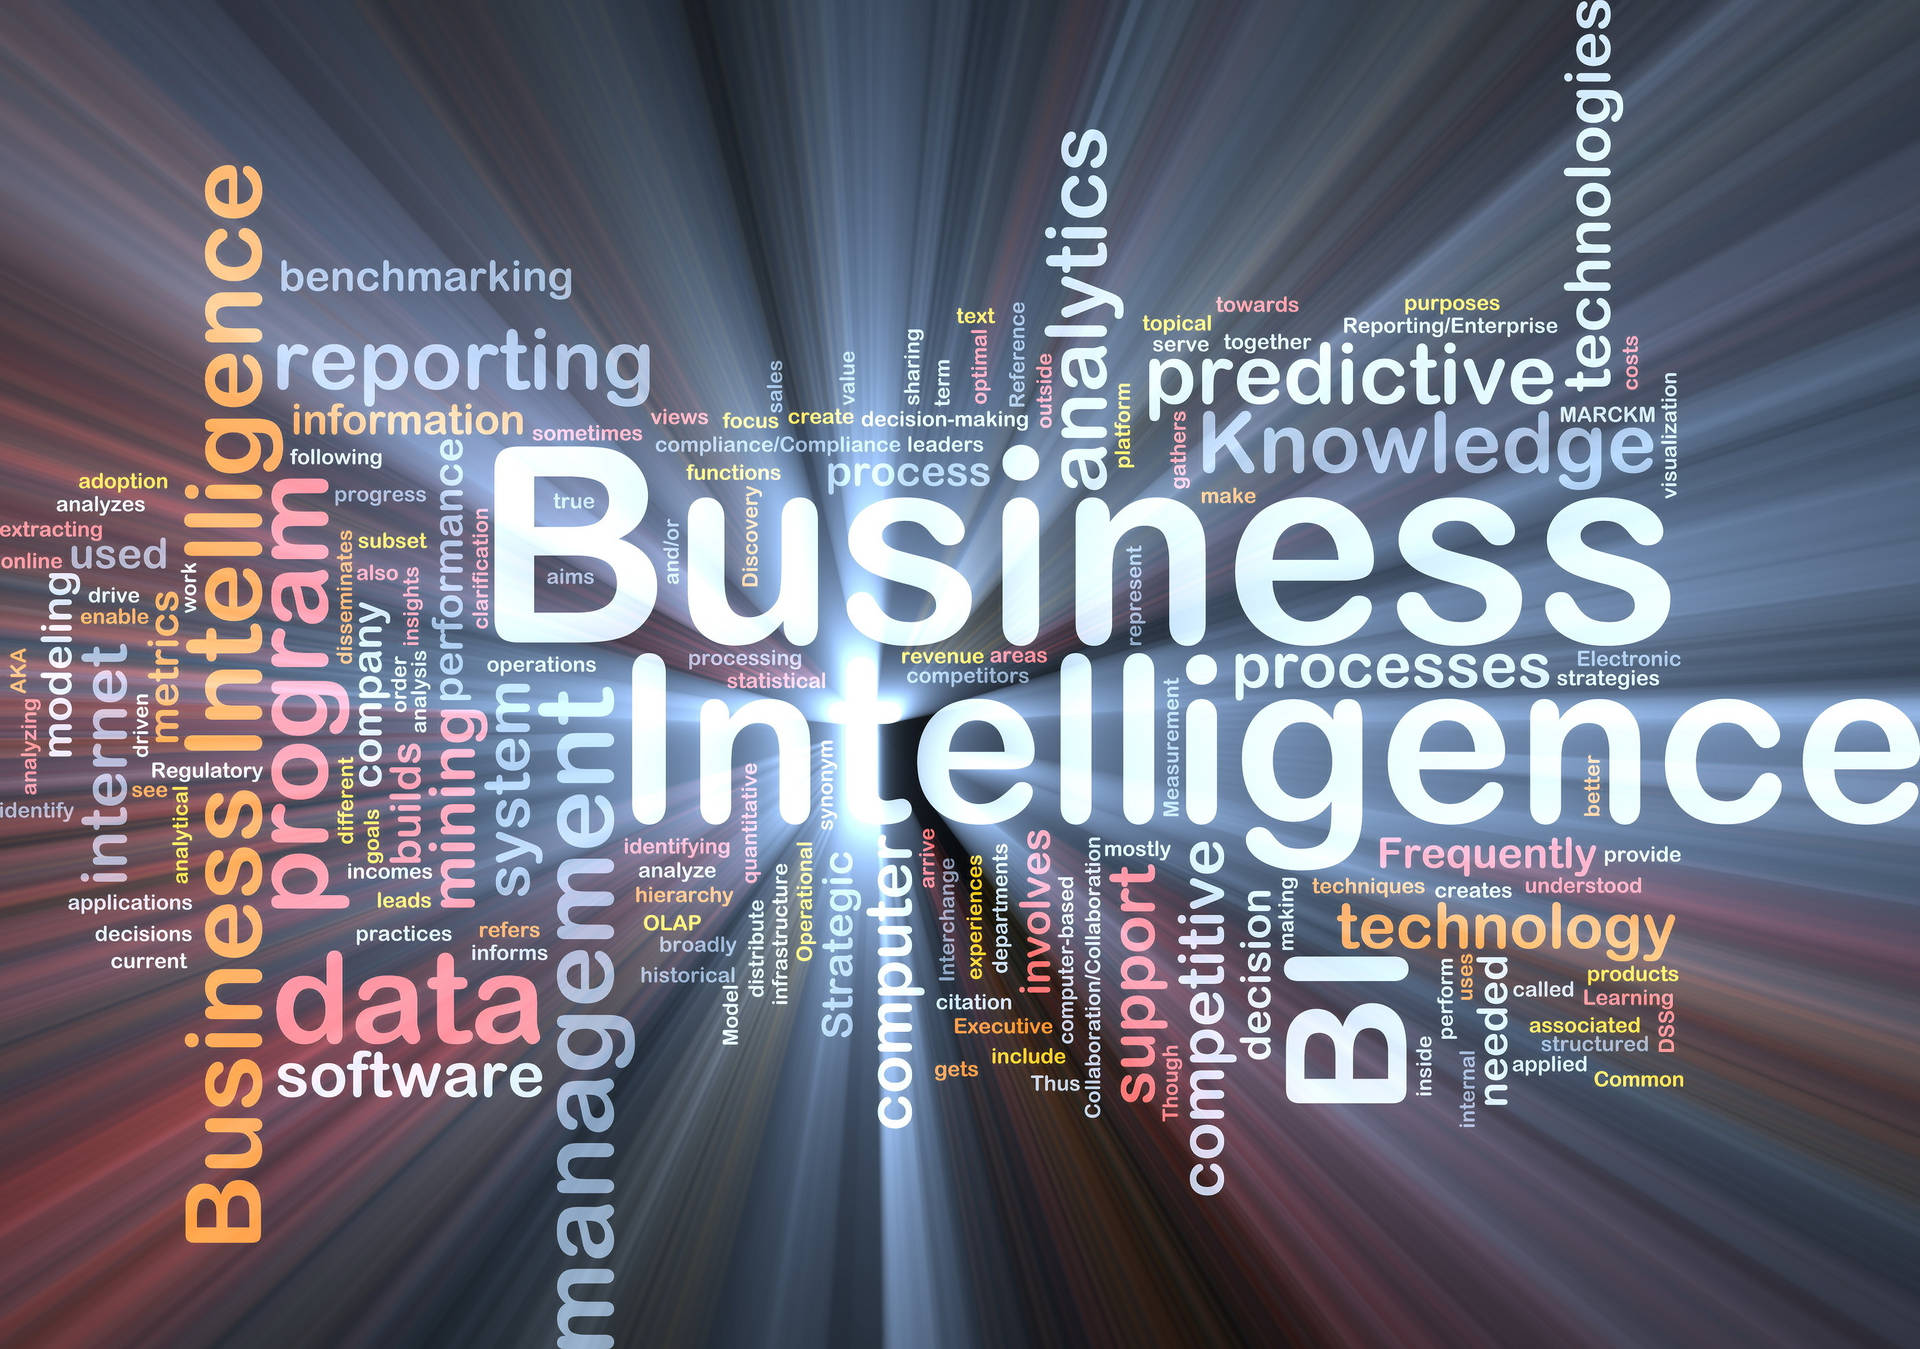 Business Intelligence Wallpaper